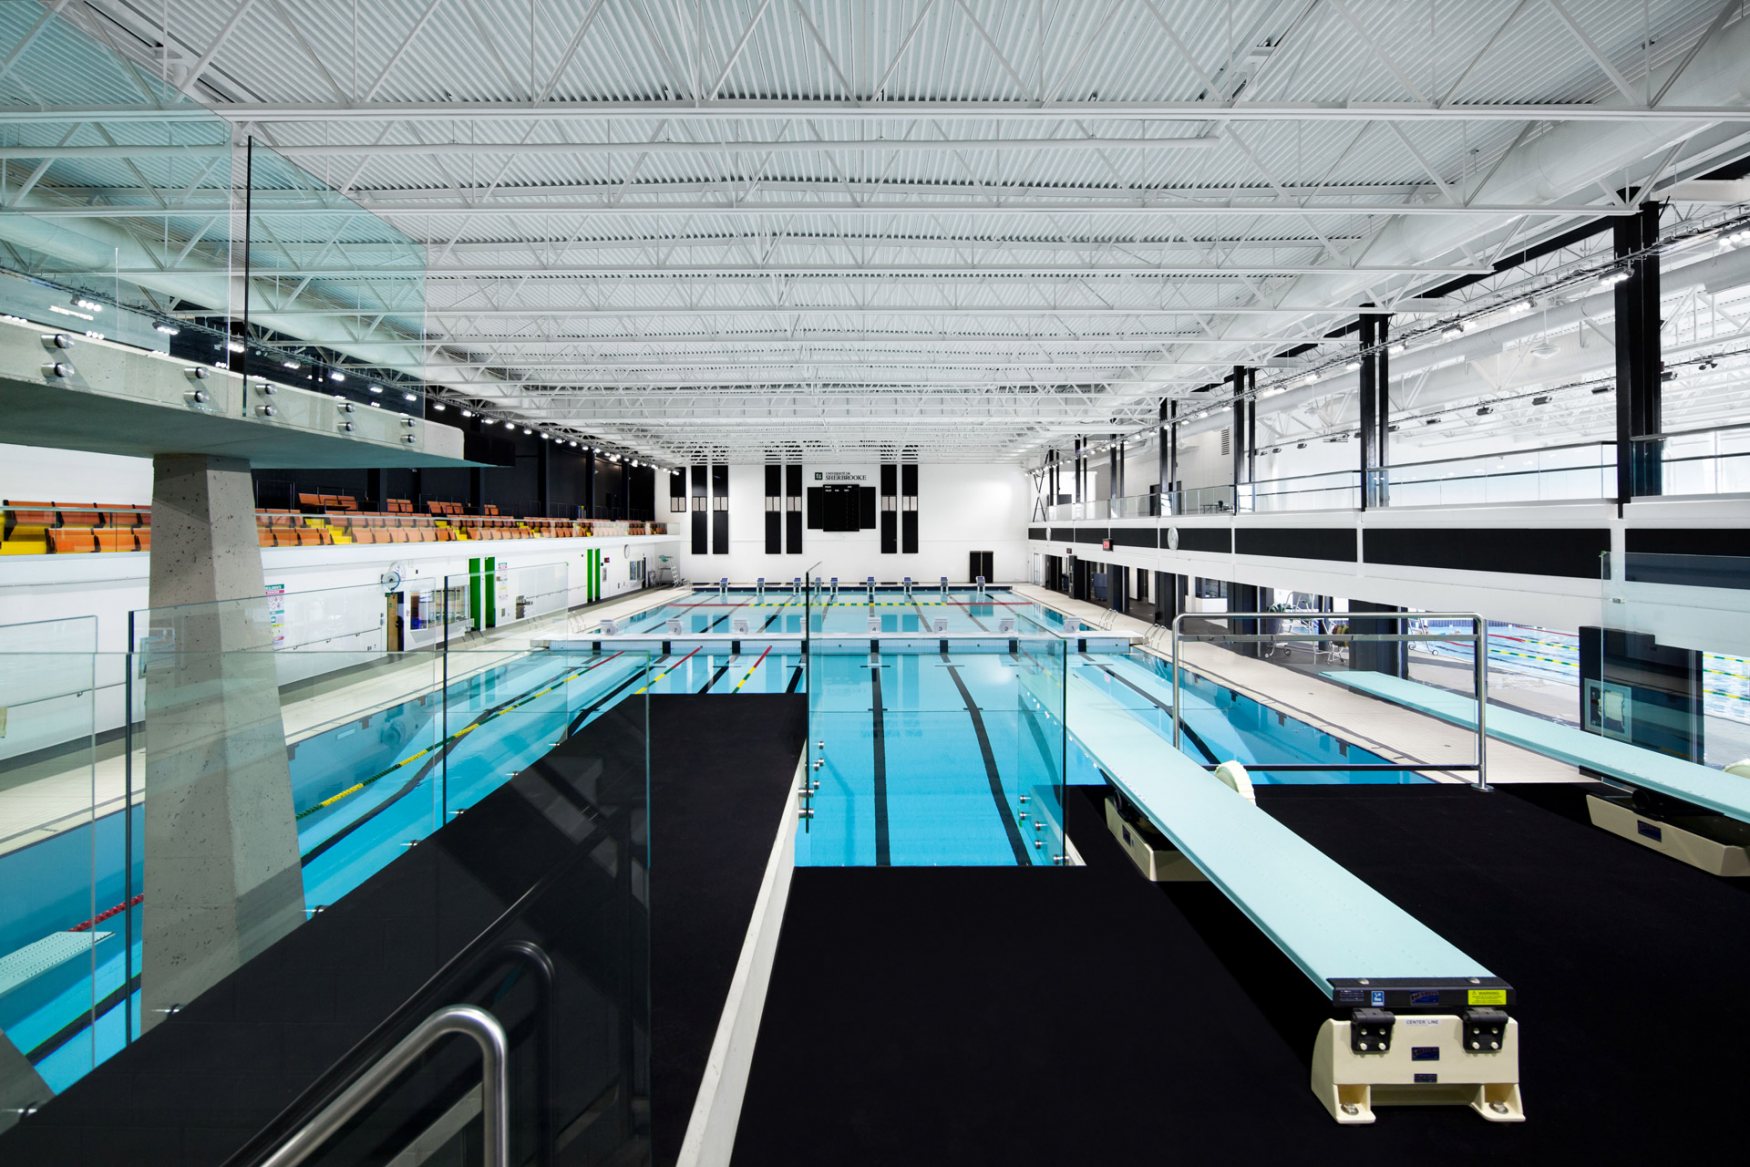 Sherbrooke University pool complex